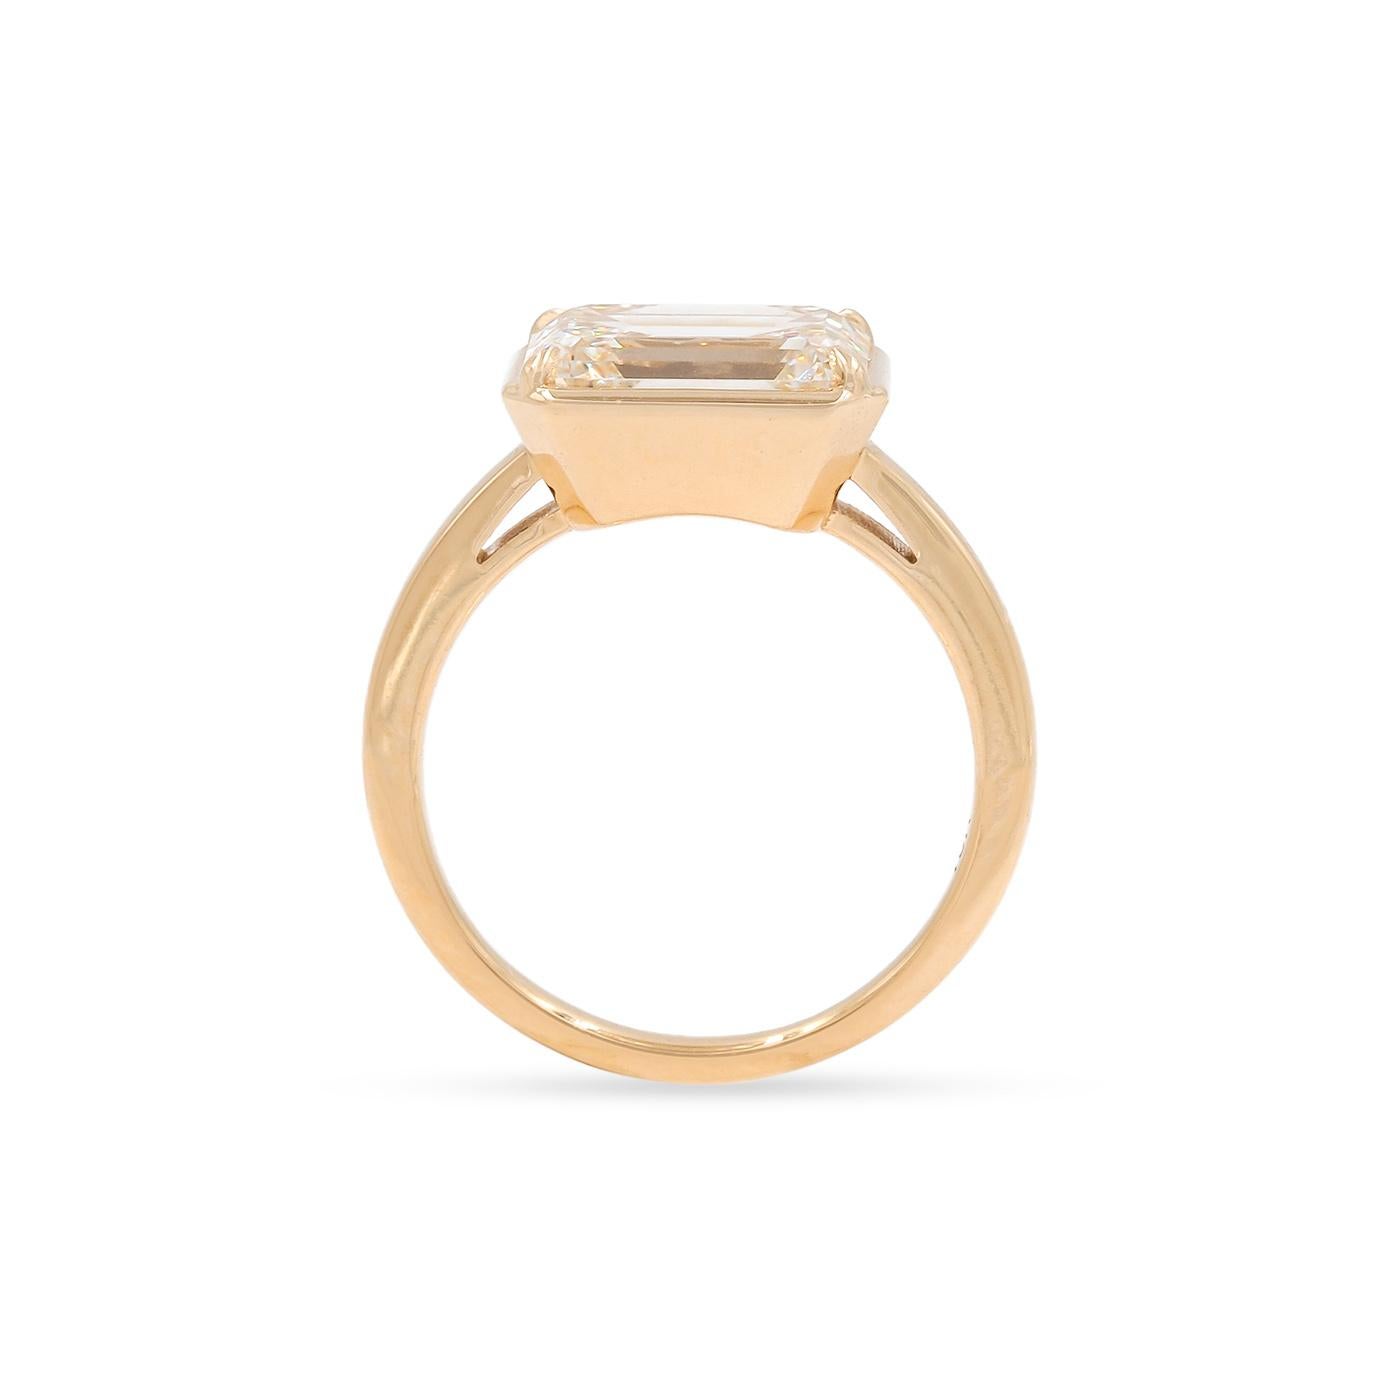 Contemporary Bespoke 4.04 Carat GIA Certified Emerald Cut Diamond Engagement Ring